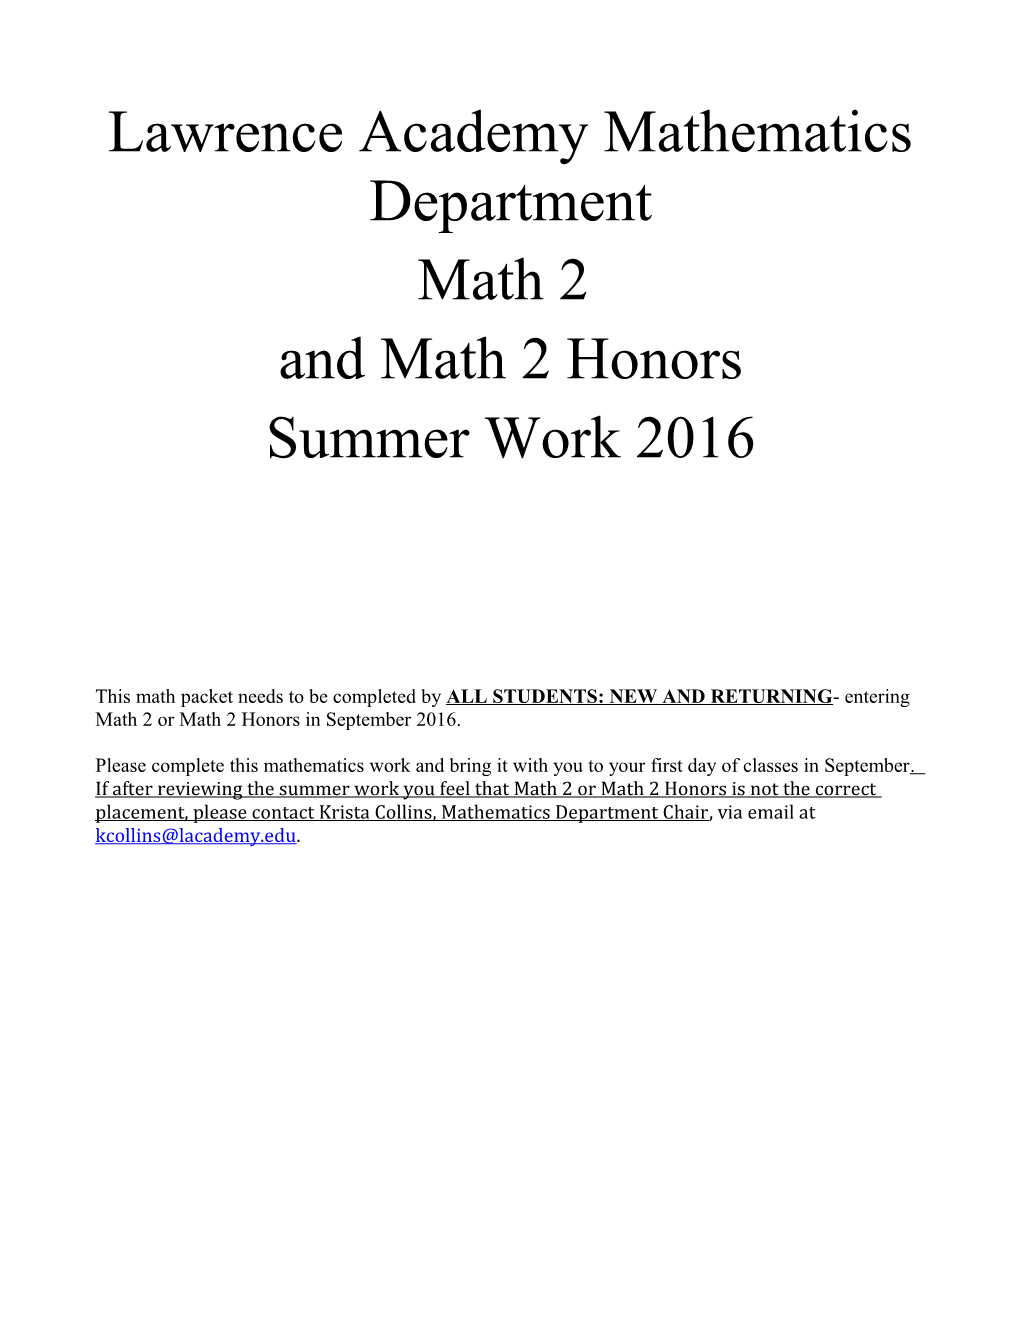 Lawrence Academy Mathematics Department